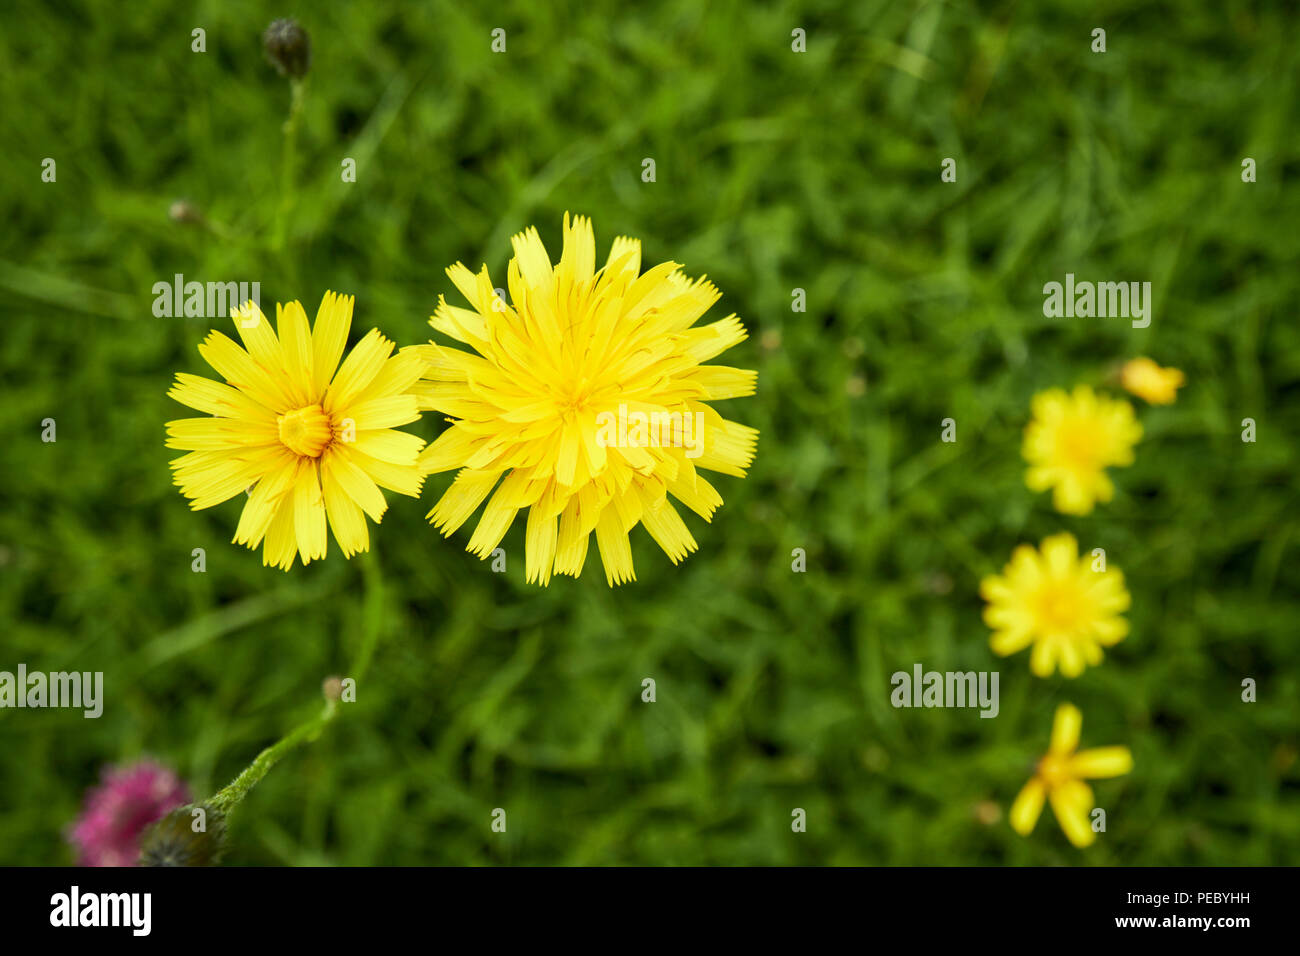 cats ear hypochaeris radicata yellow wild flower growing in a field in ireland Stock Photo